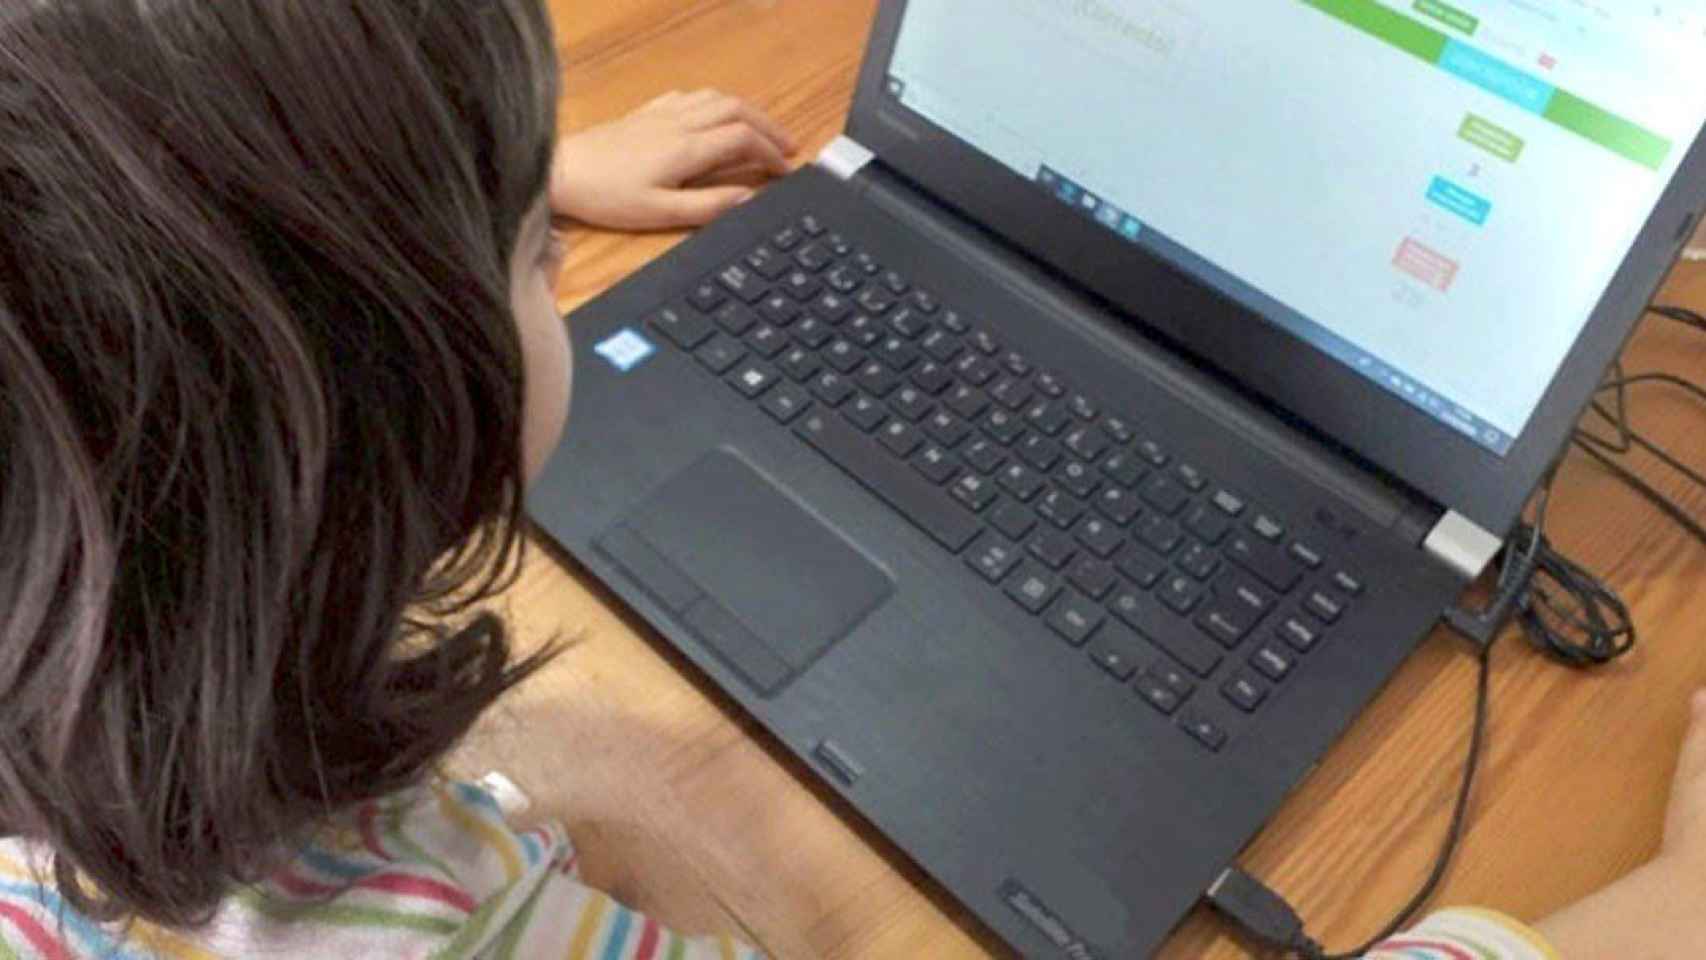 Una niña realizando tareas escolares desde un portátil / FAVB